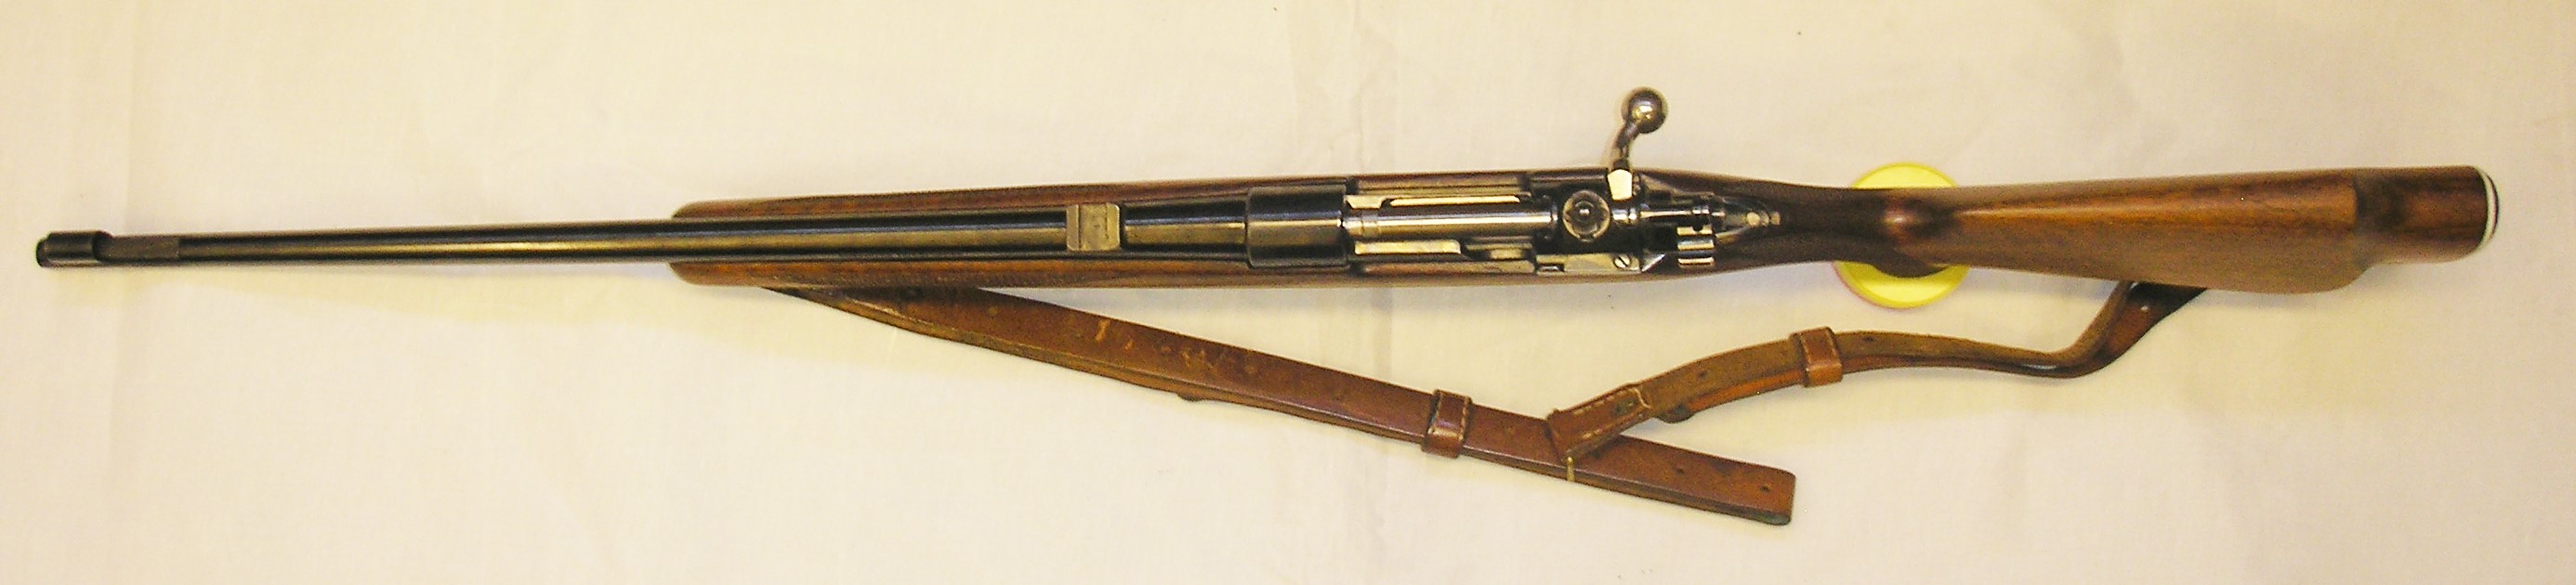 ./guns/rifle/bilder/Rifle-Kongsberg-Mauser-M62-1468-3.JPG